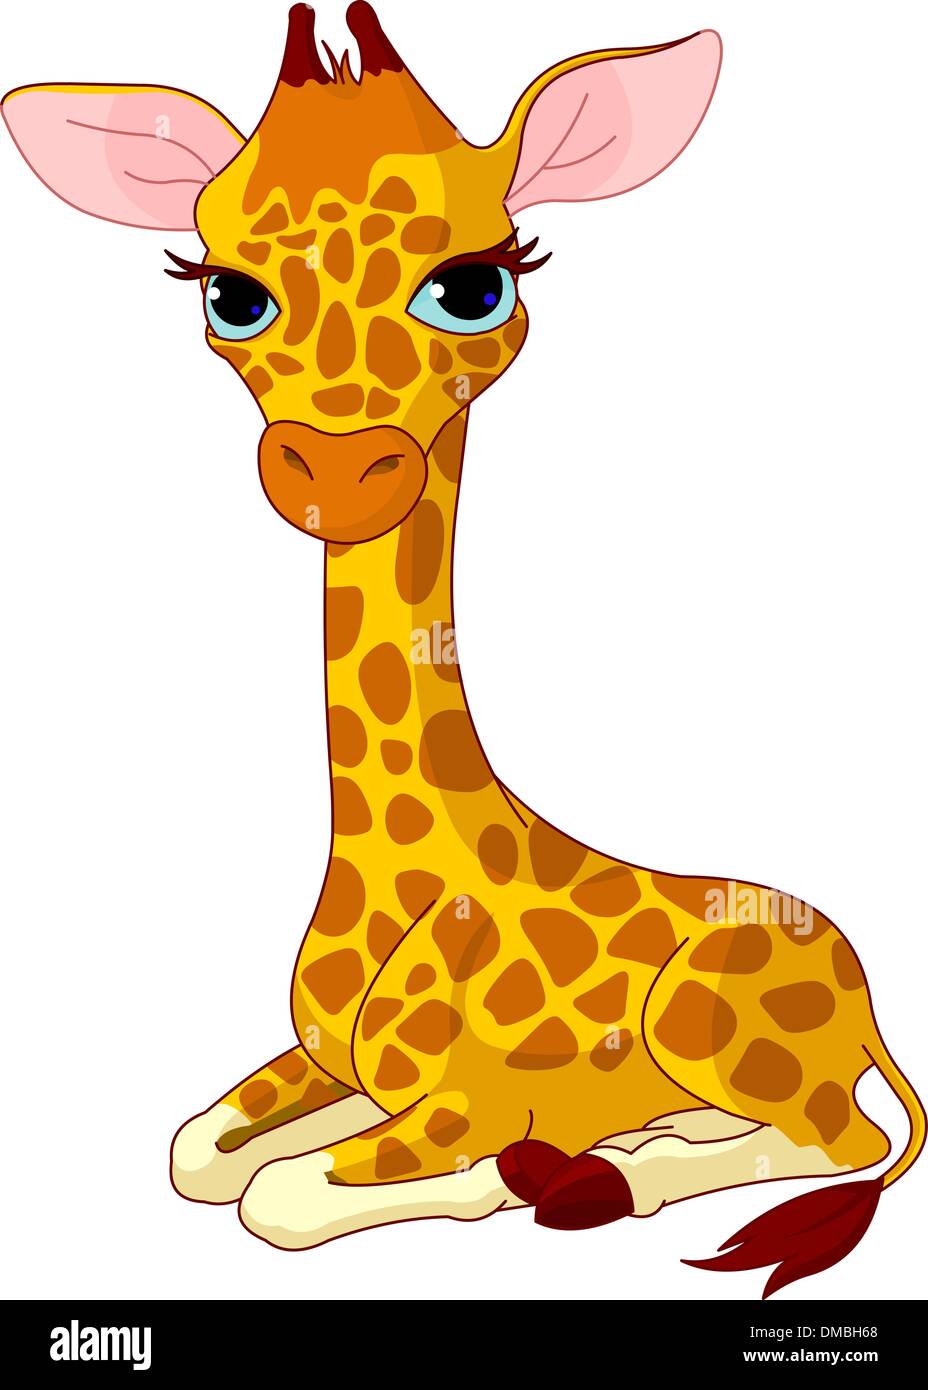 Girafe Illustration de Vecteur